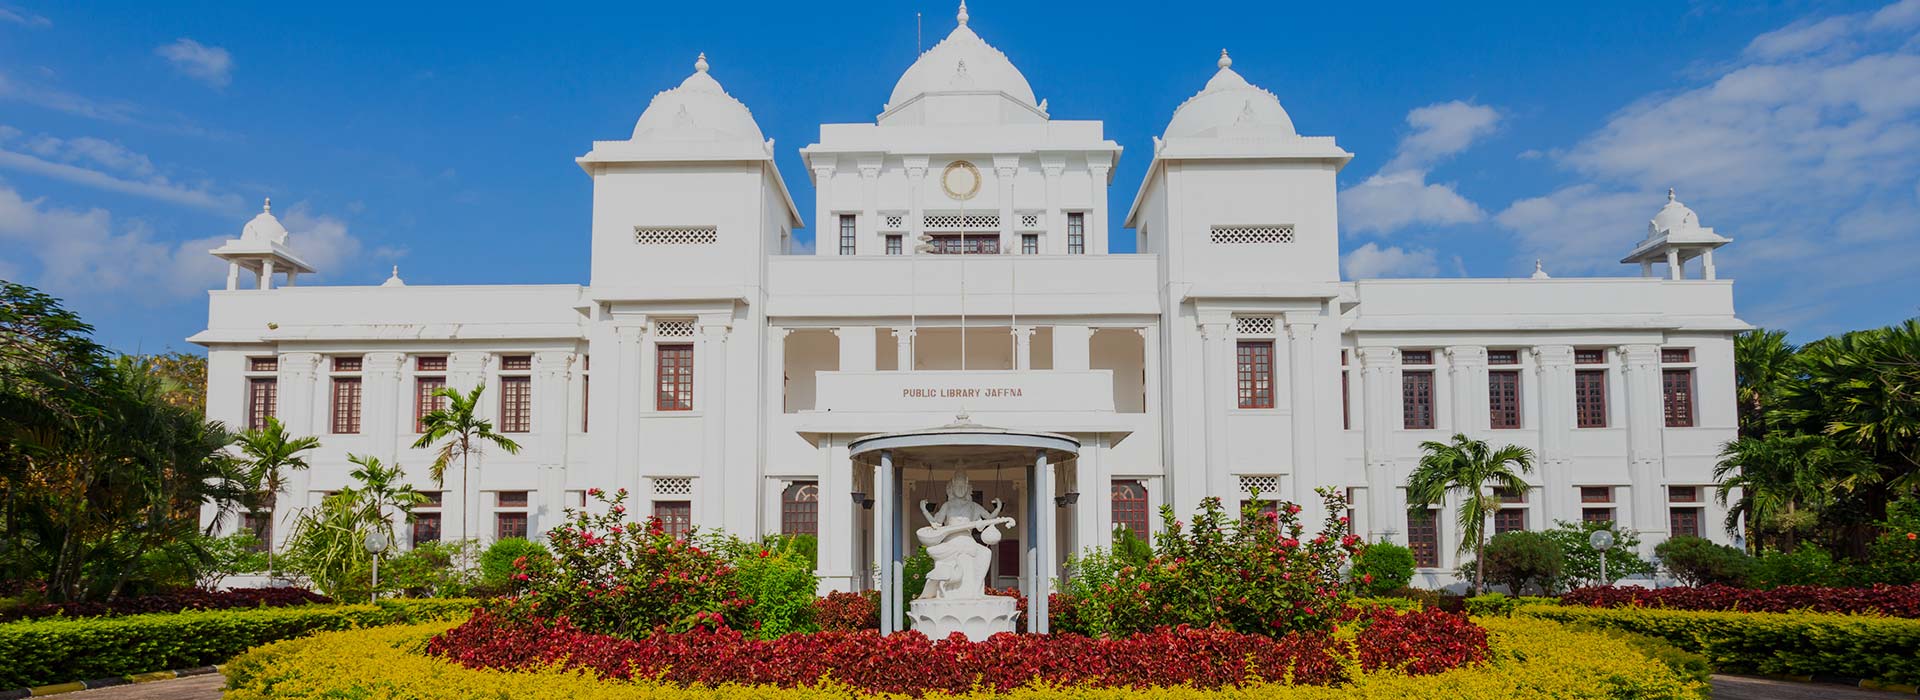 Jaffna Library | Attractions in Jaffna | Love Sri Lanka